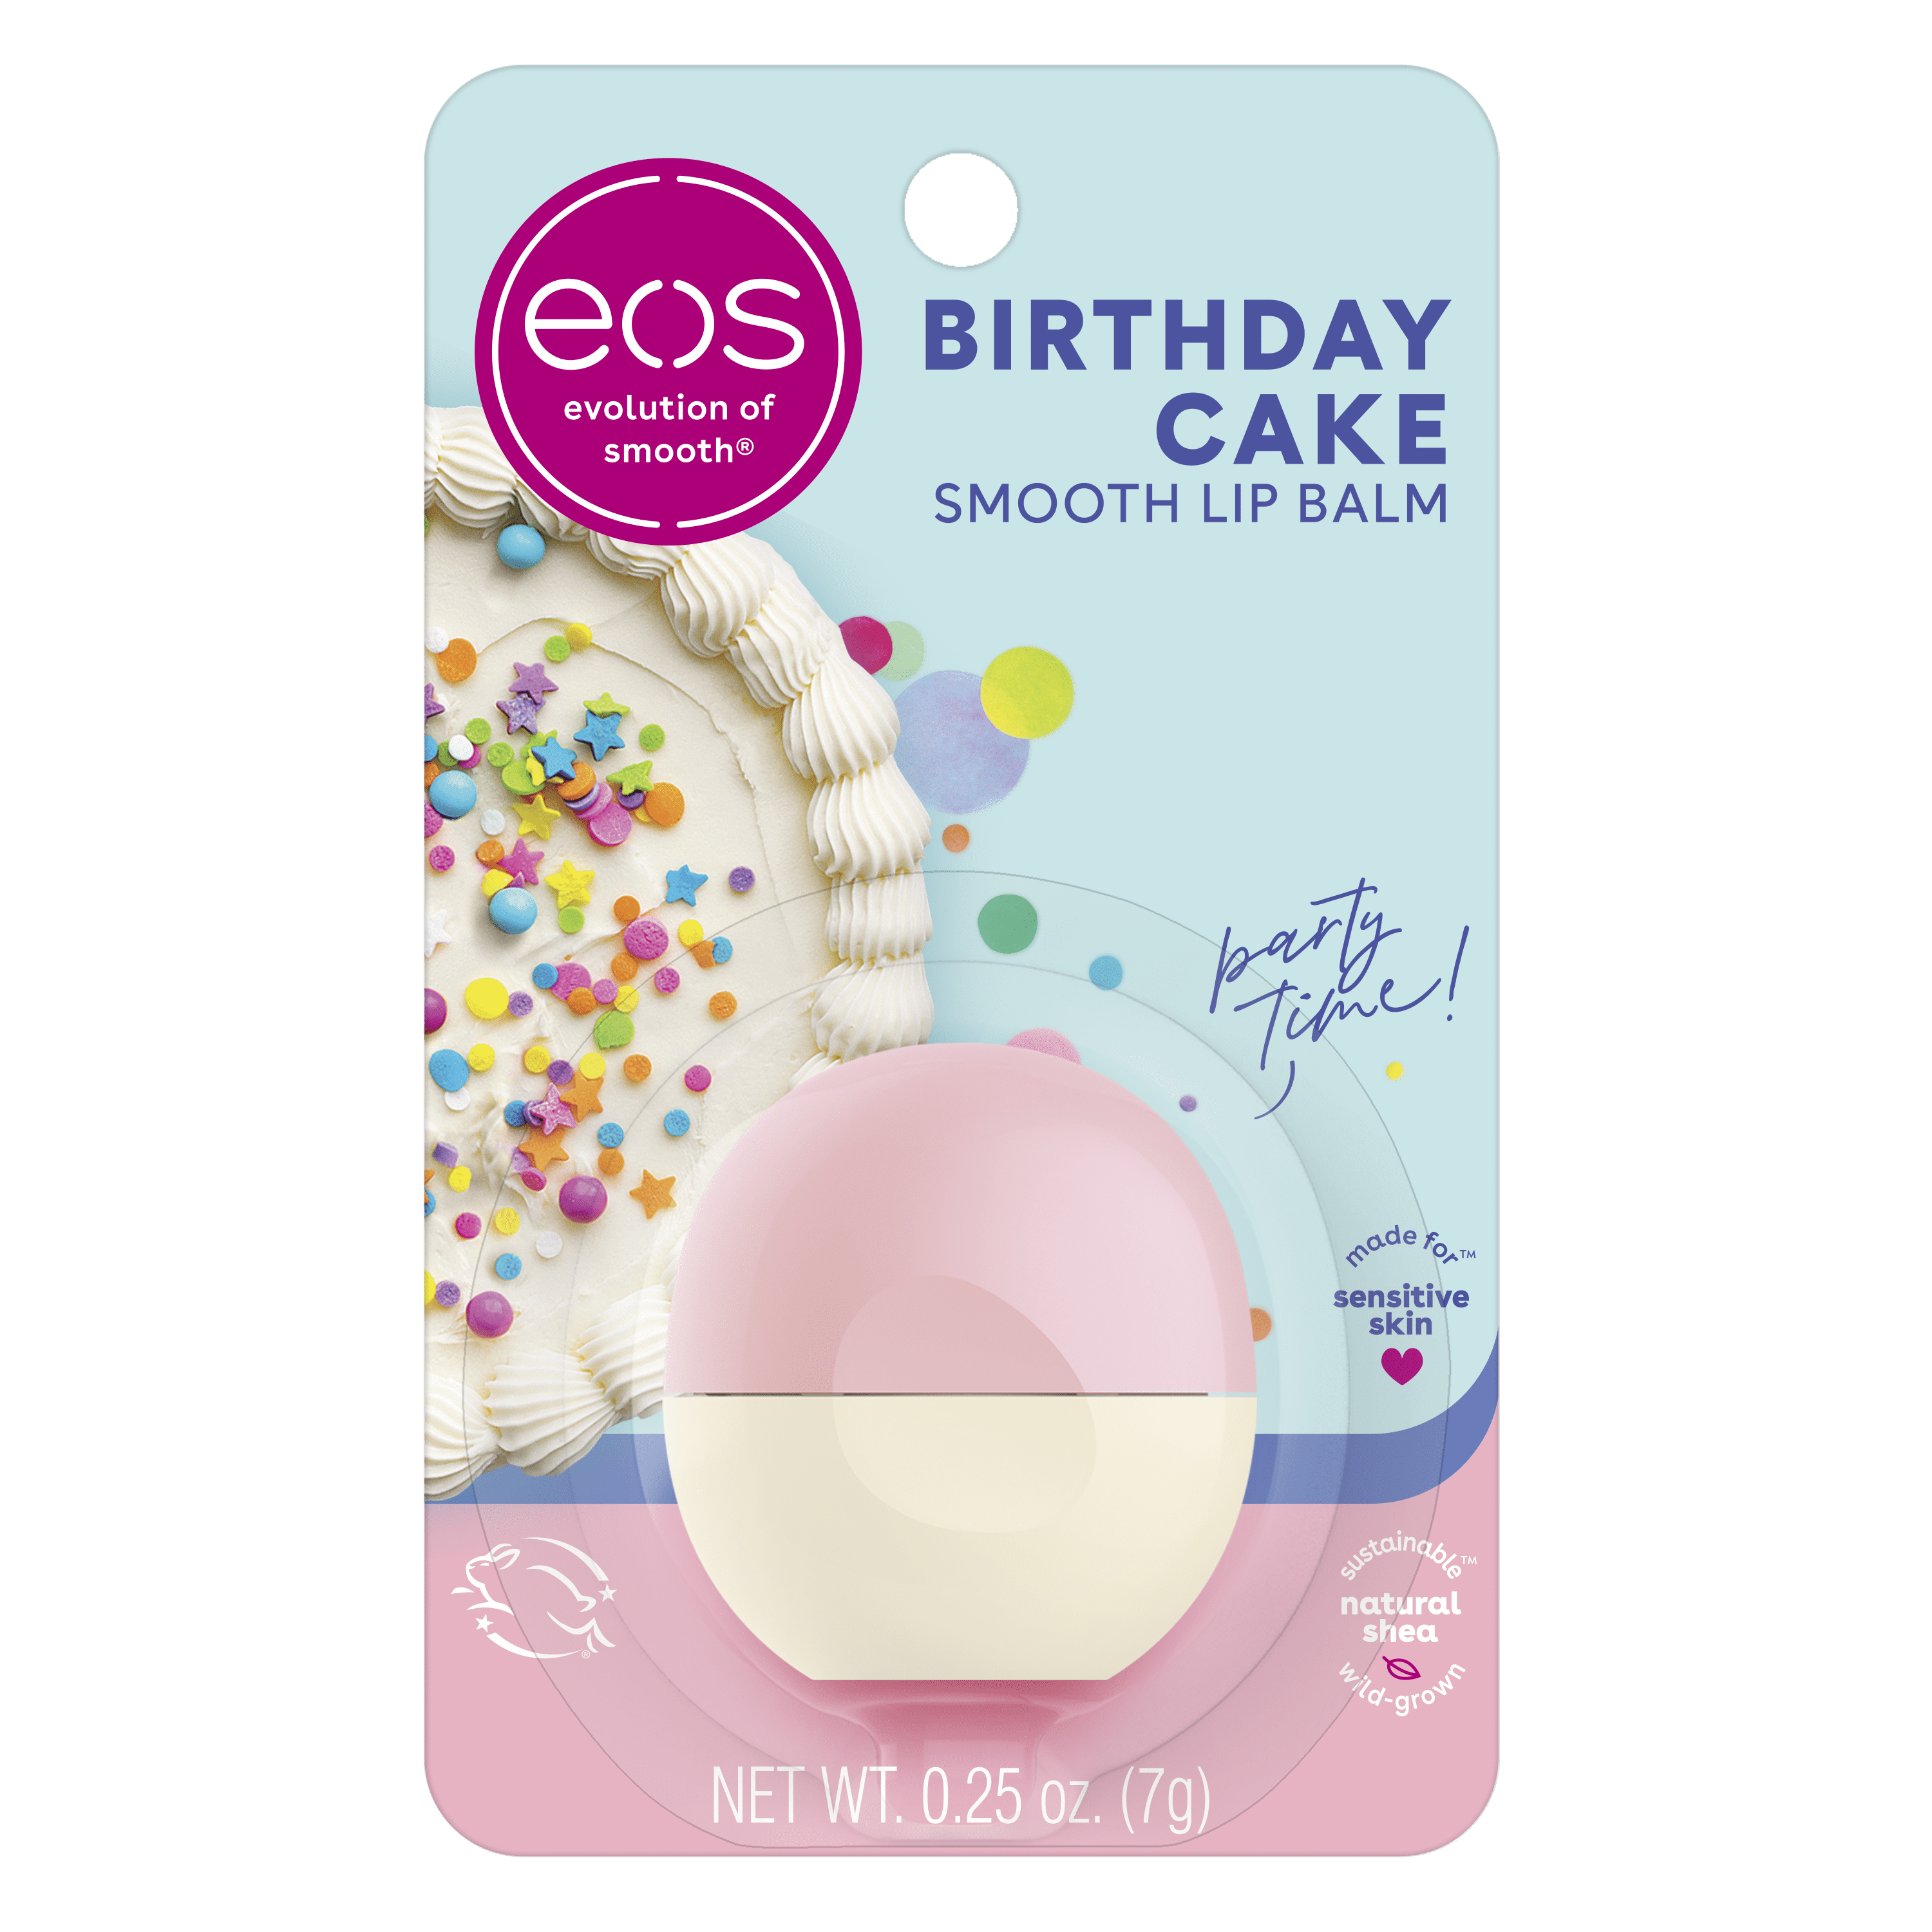 eos Super Soft Shea Lip Balm- Birthday Cake | 0.25 oz | 1 Sphere